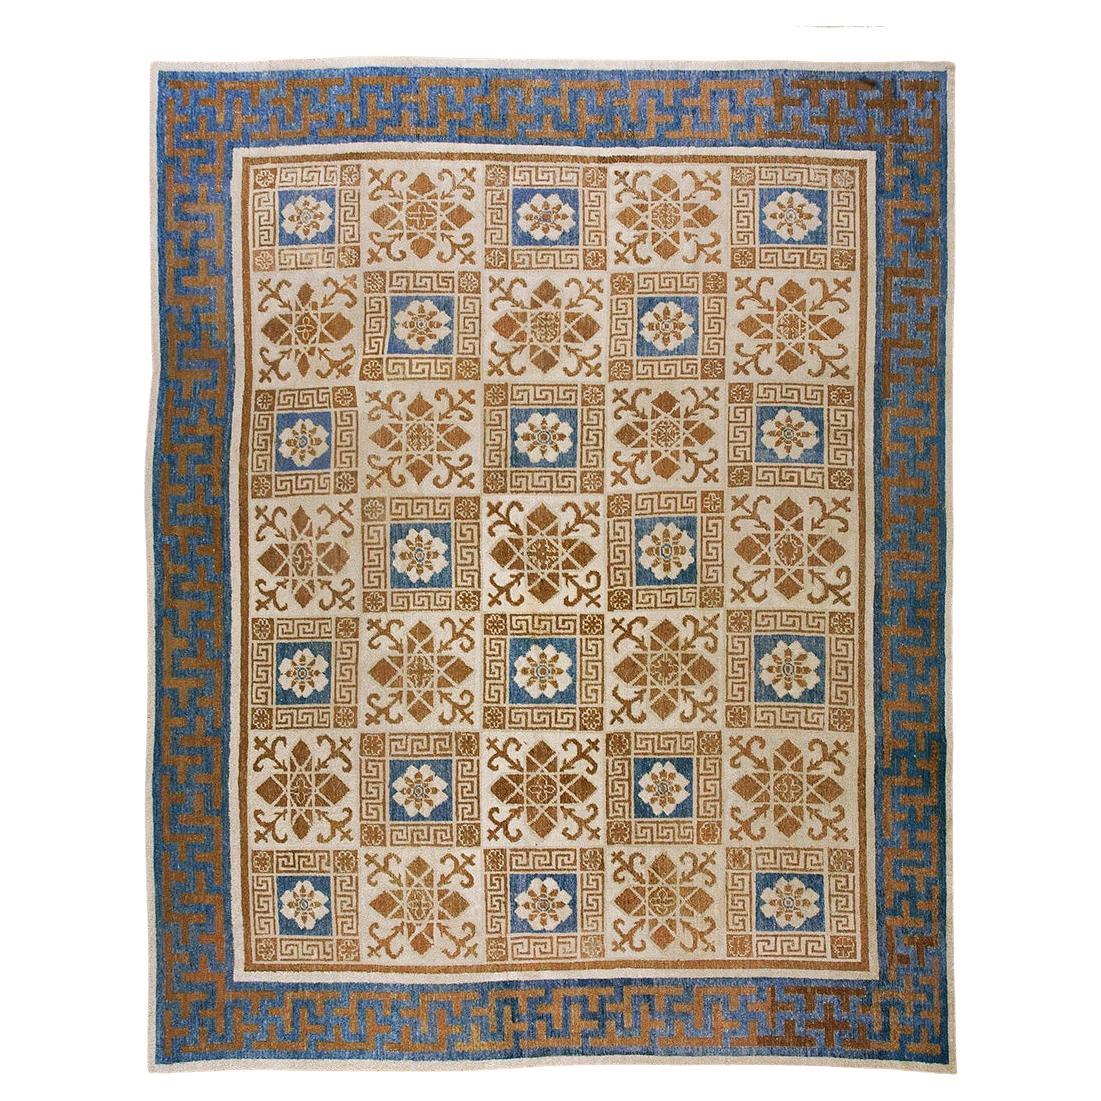 Mid 19th Century N. Chinese Mongolian Carpet ( 10'4" x 13'4" - 315 x 405 )